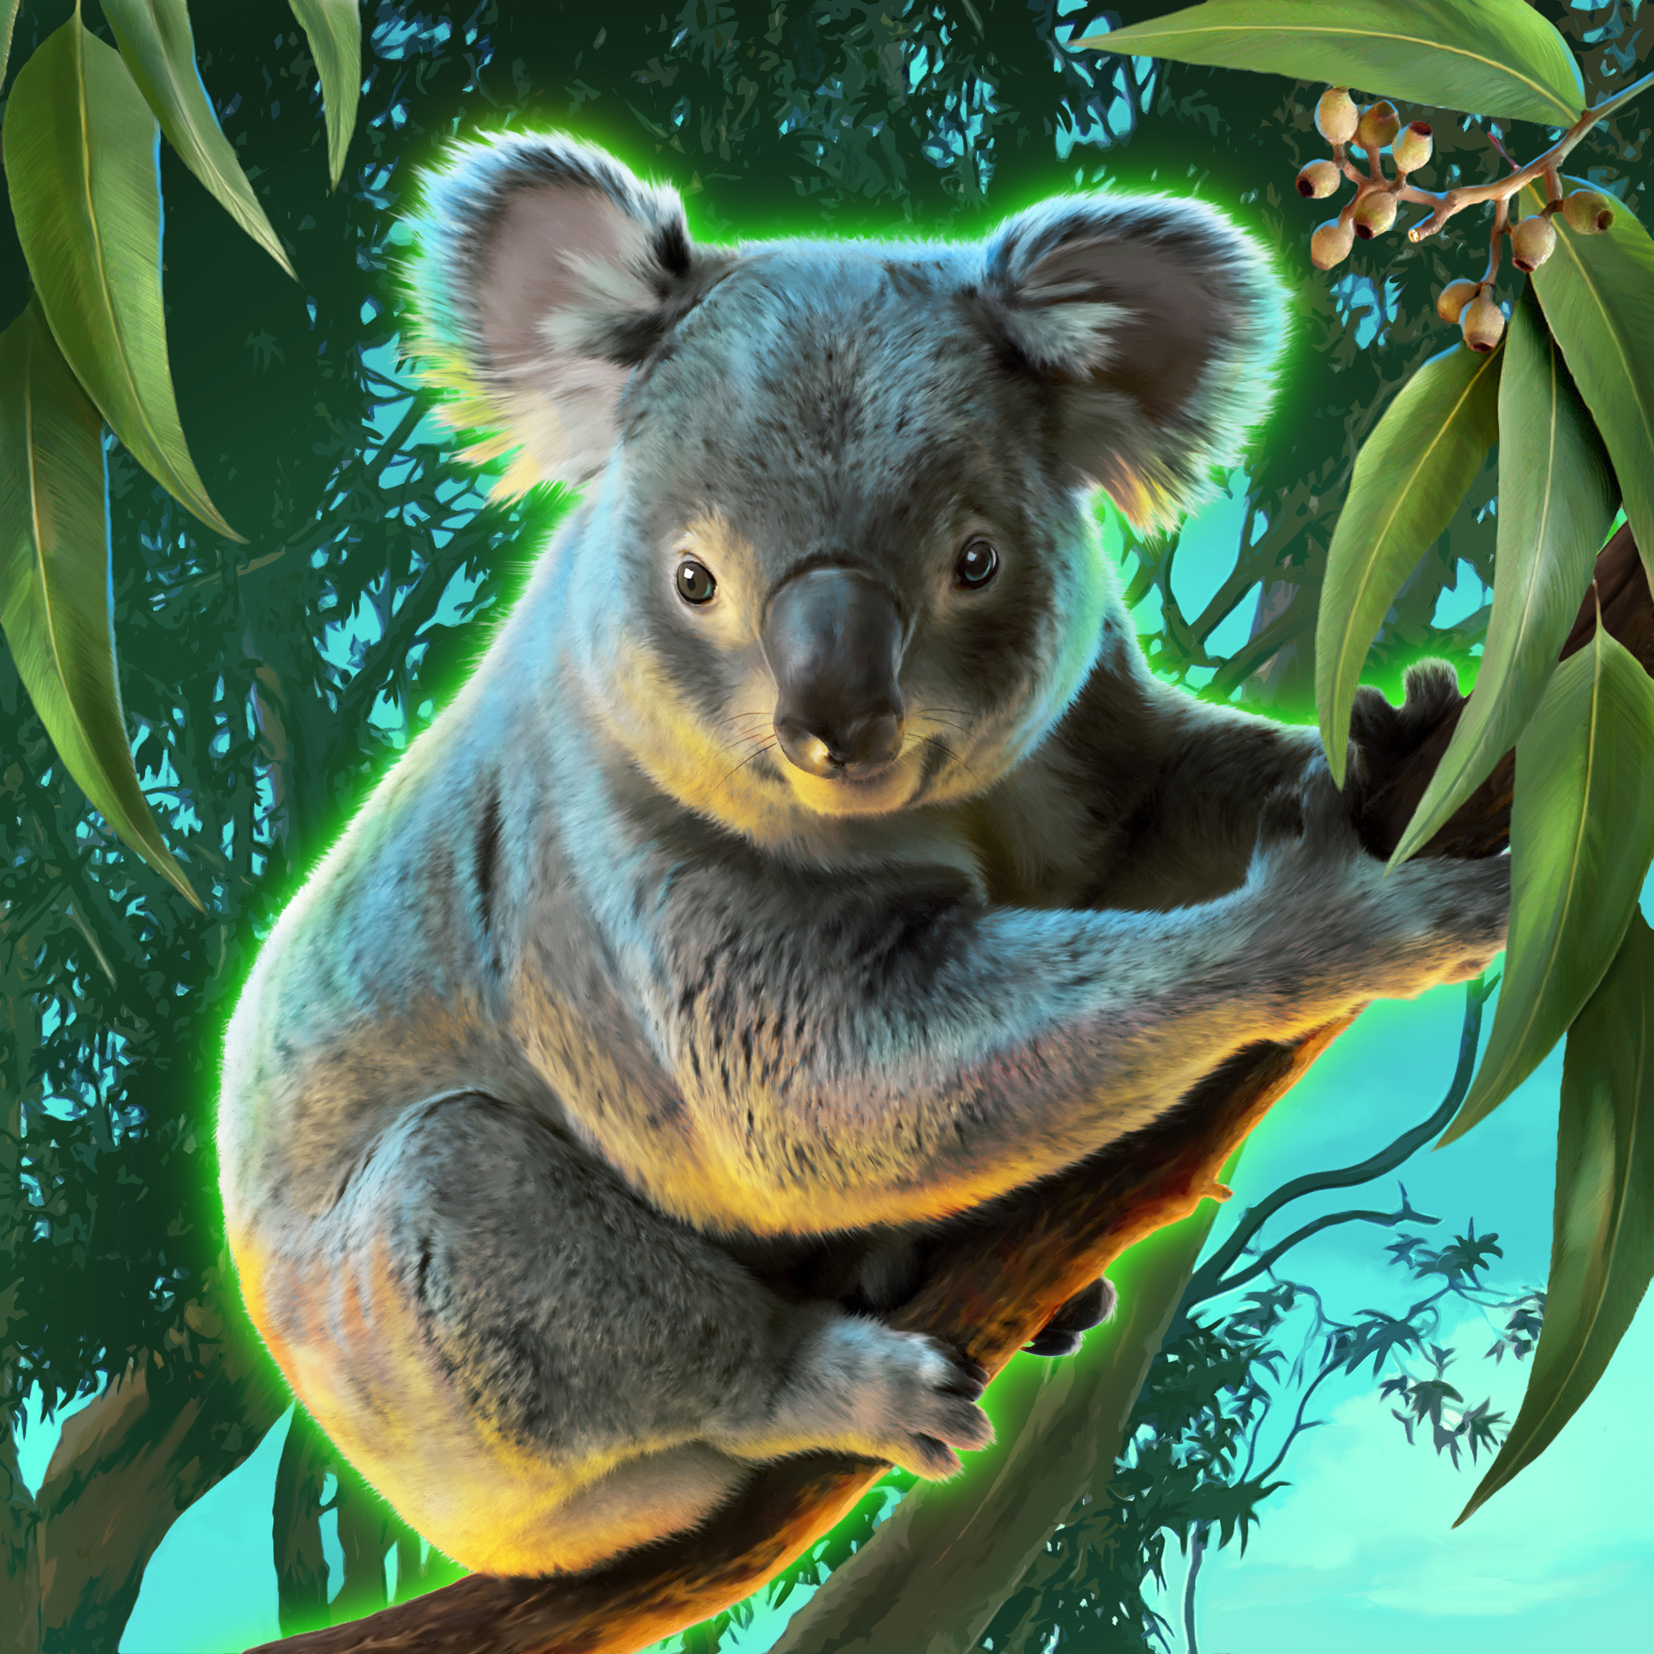 Koala DownUnder